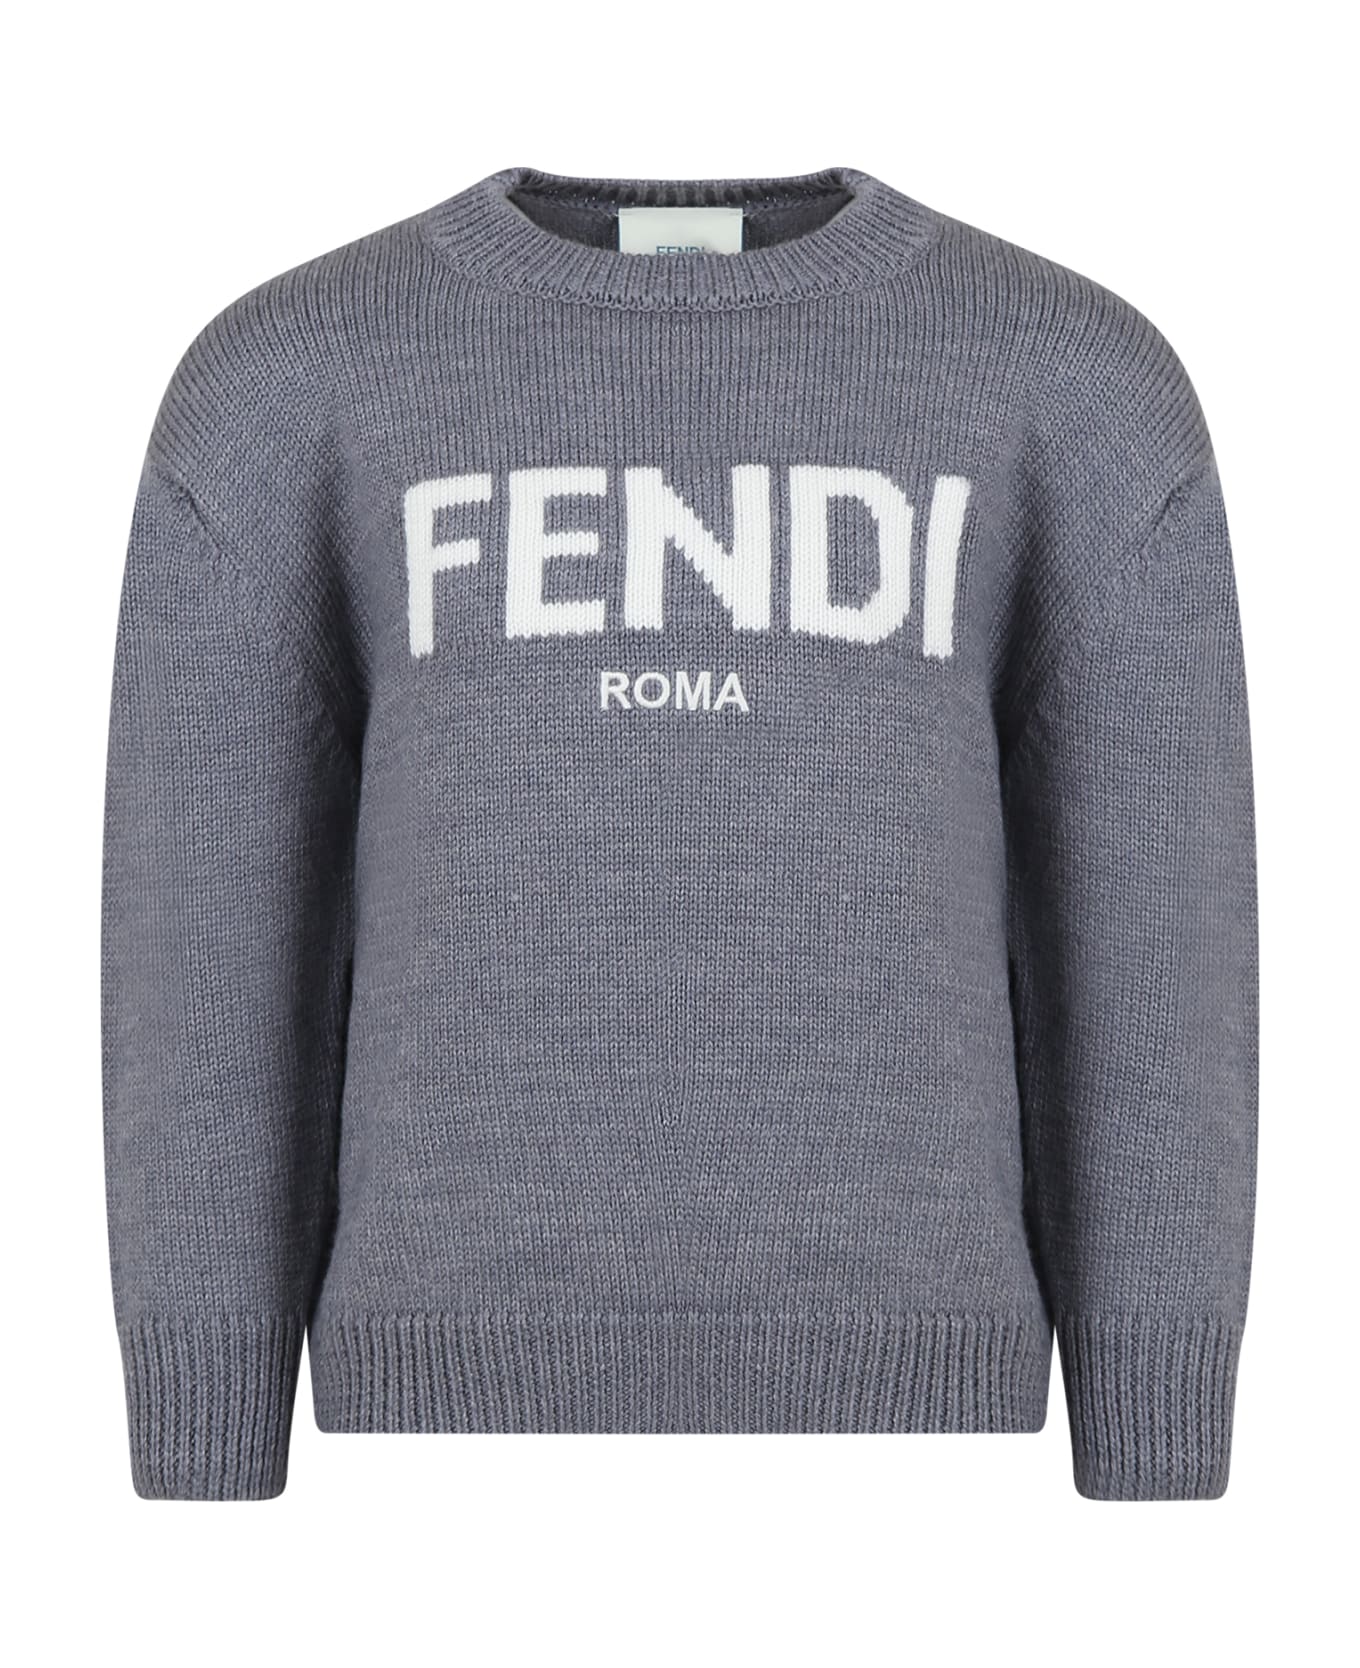 Fendi Grey Sweater With Logo For Kids - Grey